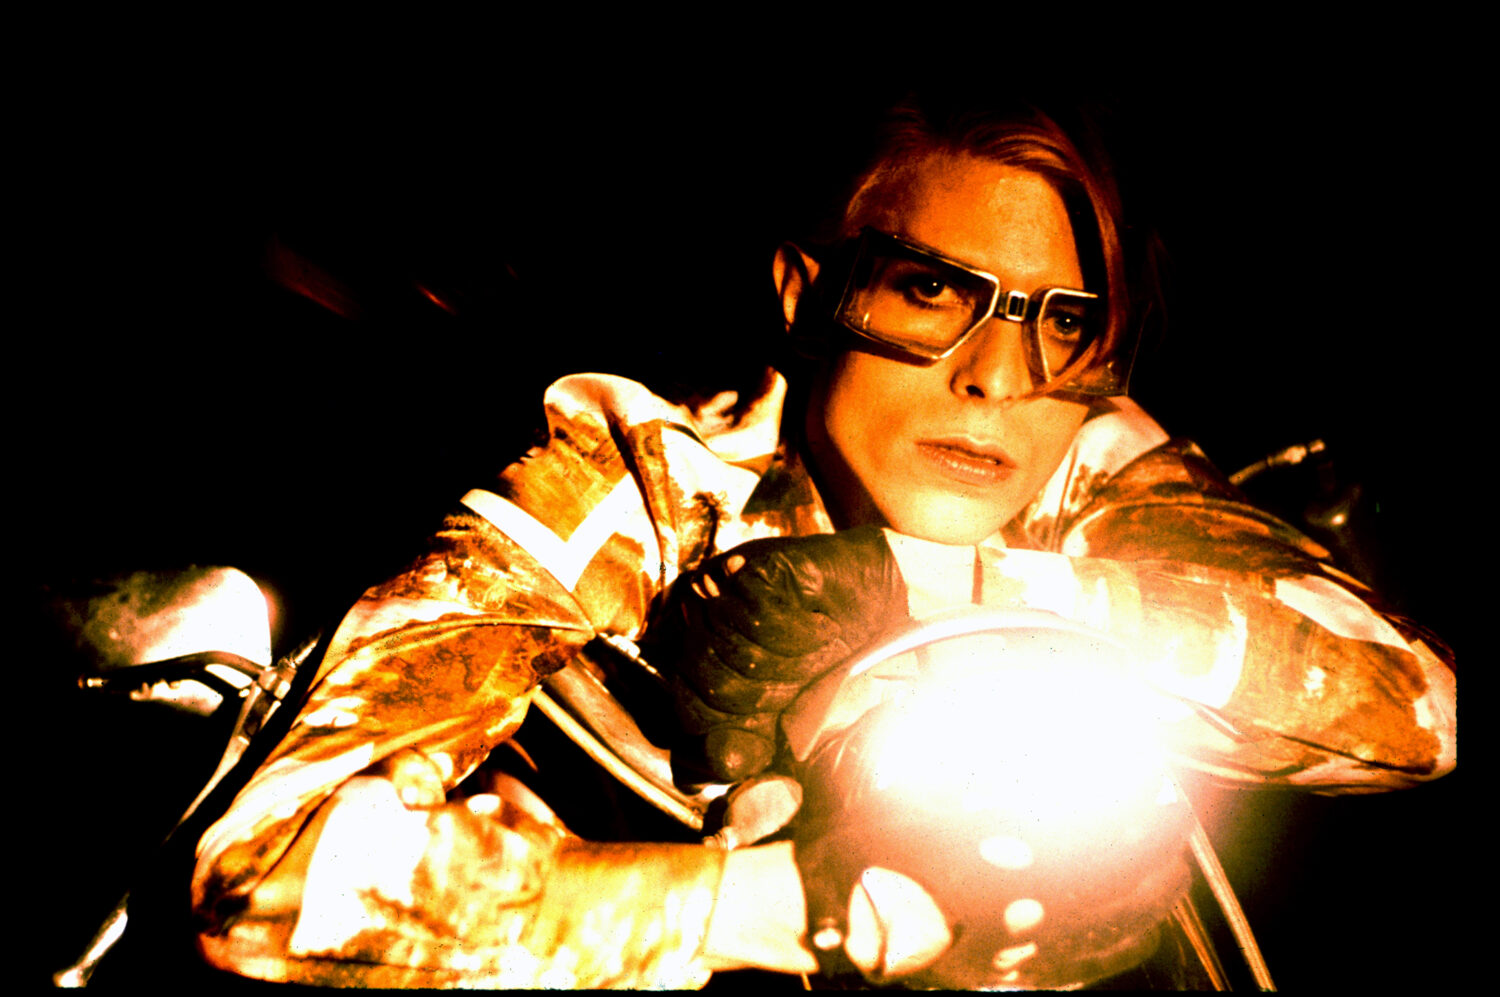 Steve Schapiro: David Bowie with Motorcycle